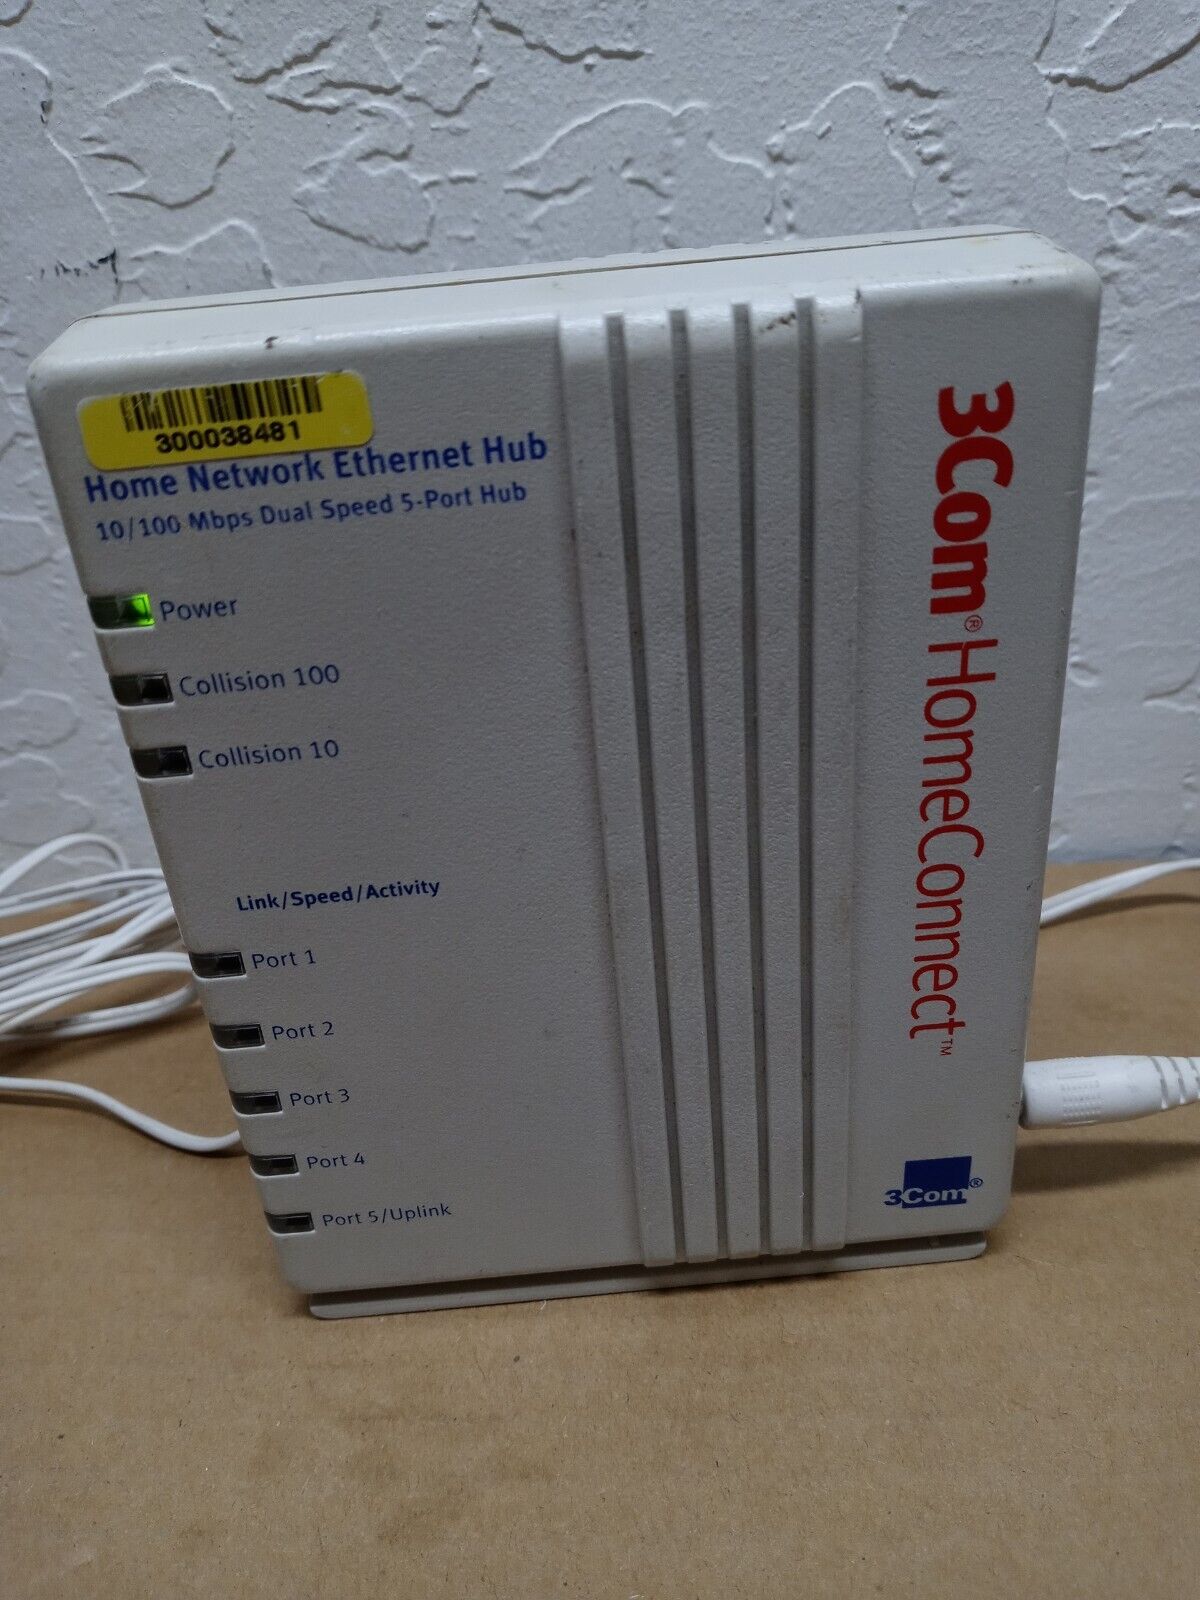   3COM HomeConnect Home Network Ethernet Hub - 5 Ports